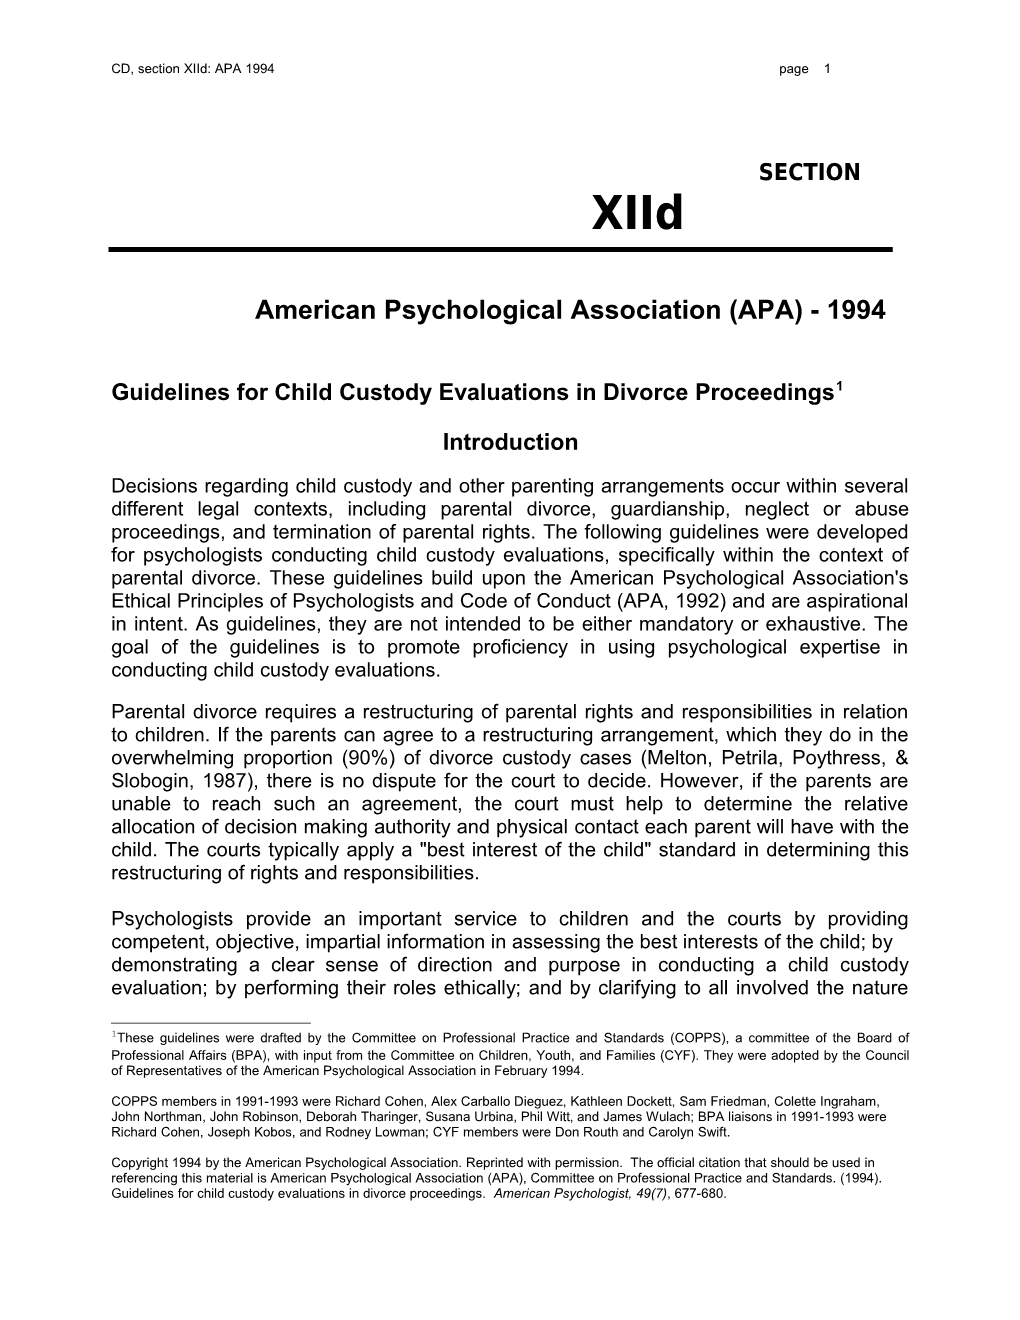 American Psychological Association (APA) - 1994